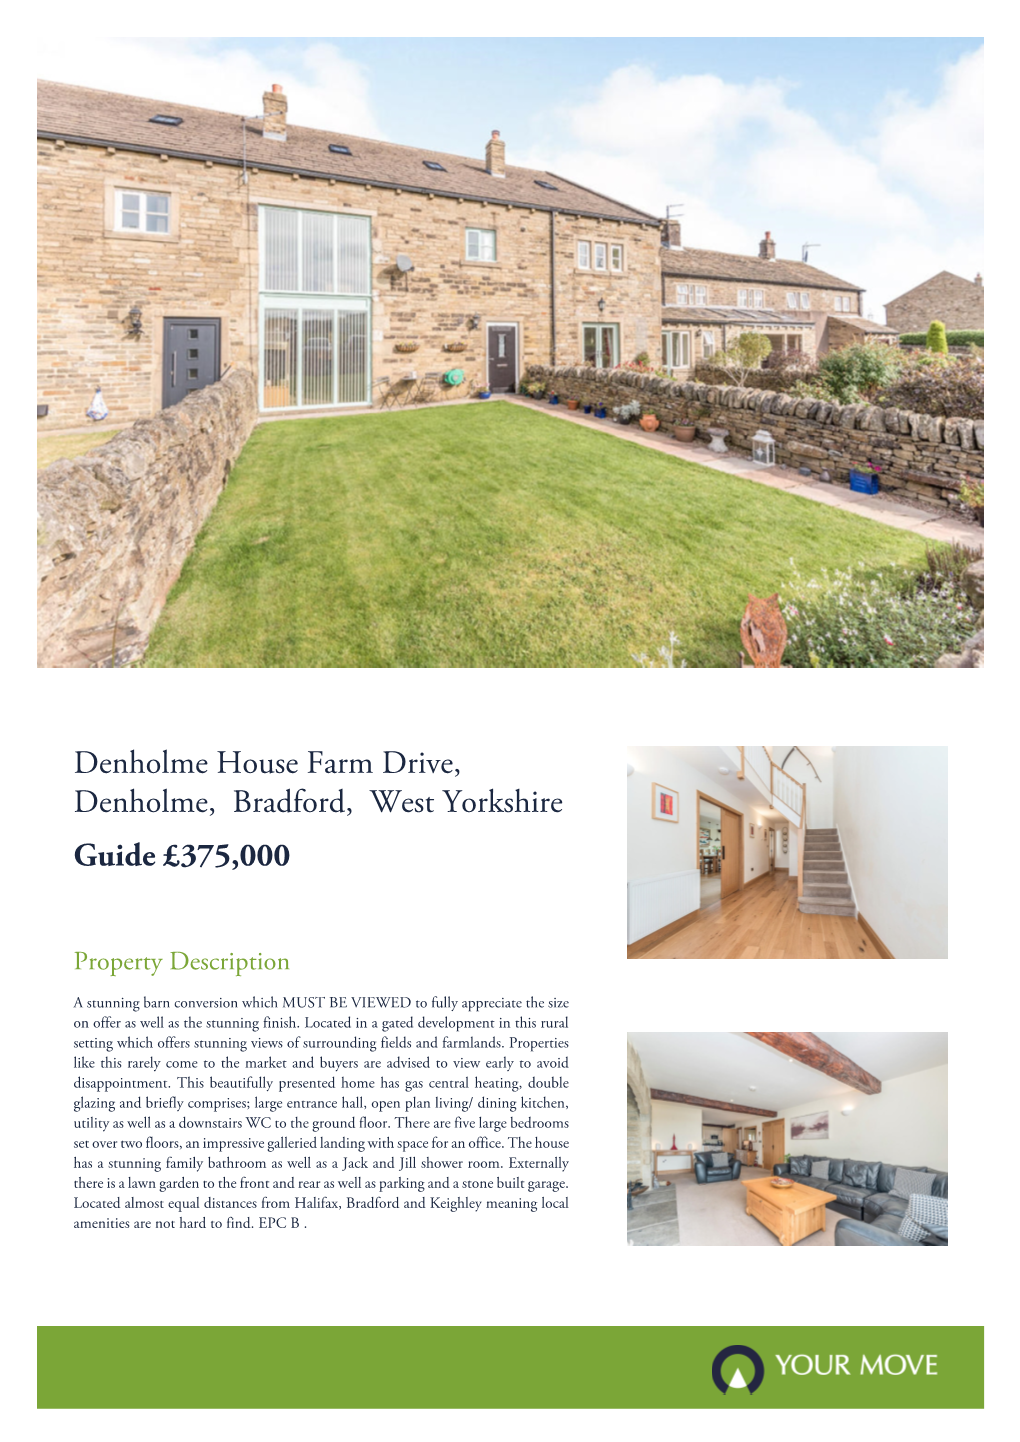 Denholme House Farm Drive, Denholme, Bradford, West Yorkshire Guide £375,000